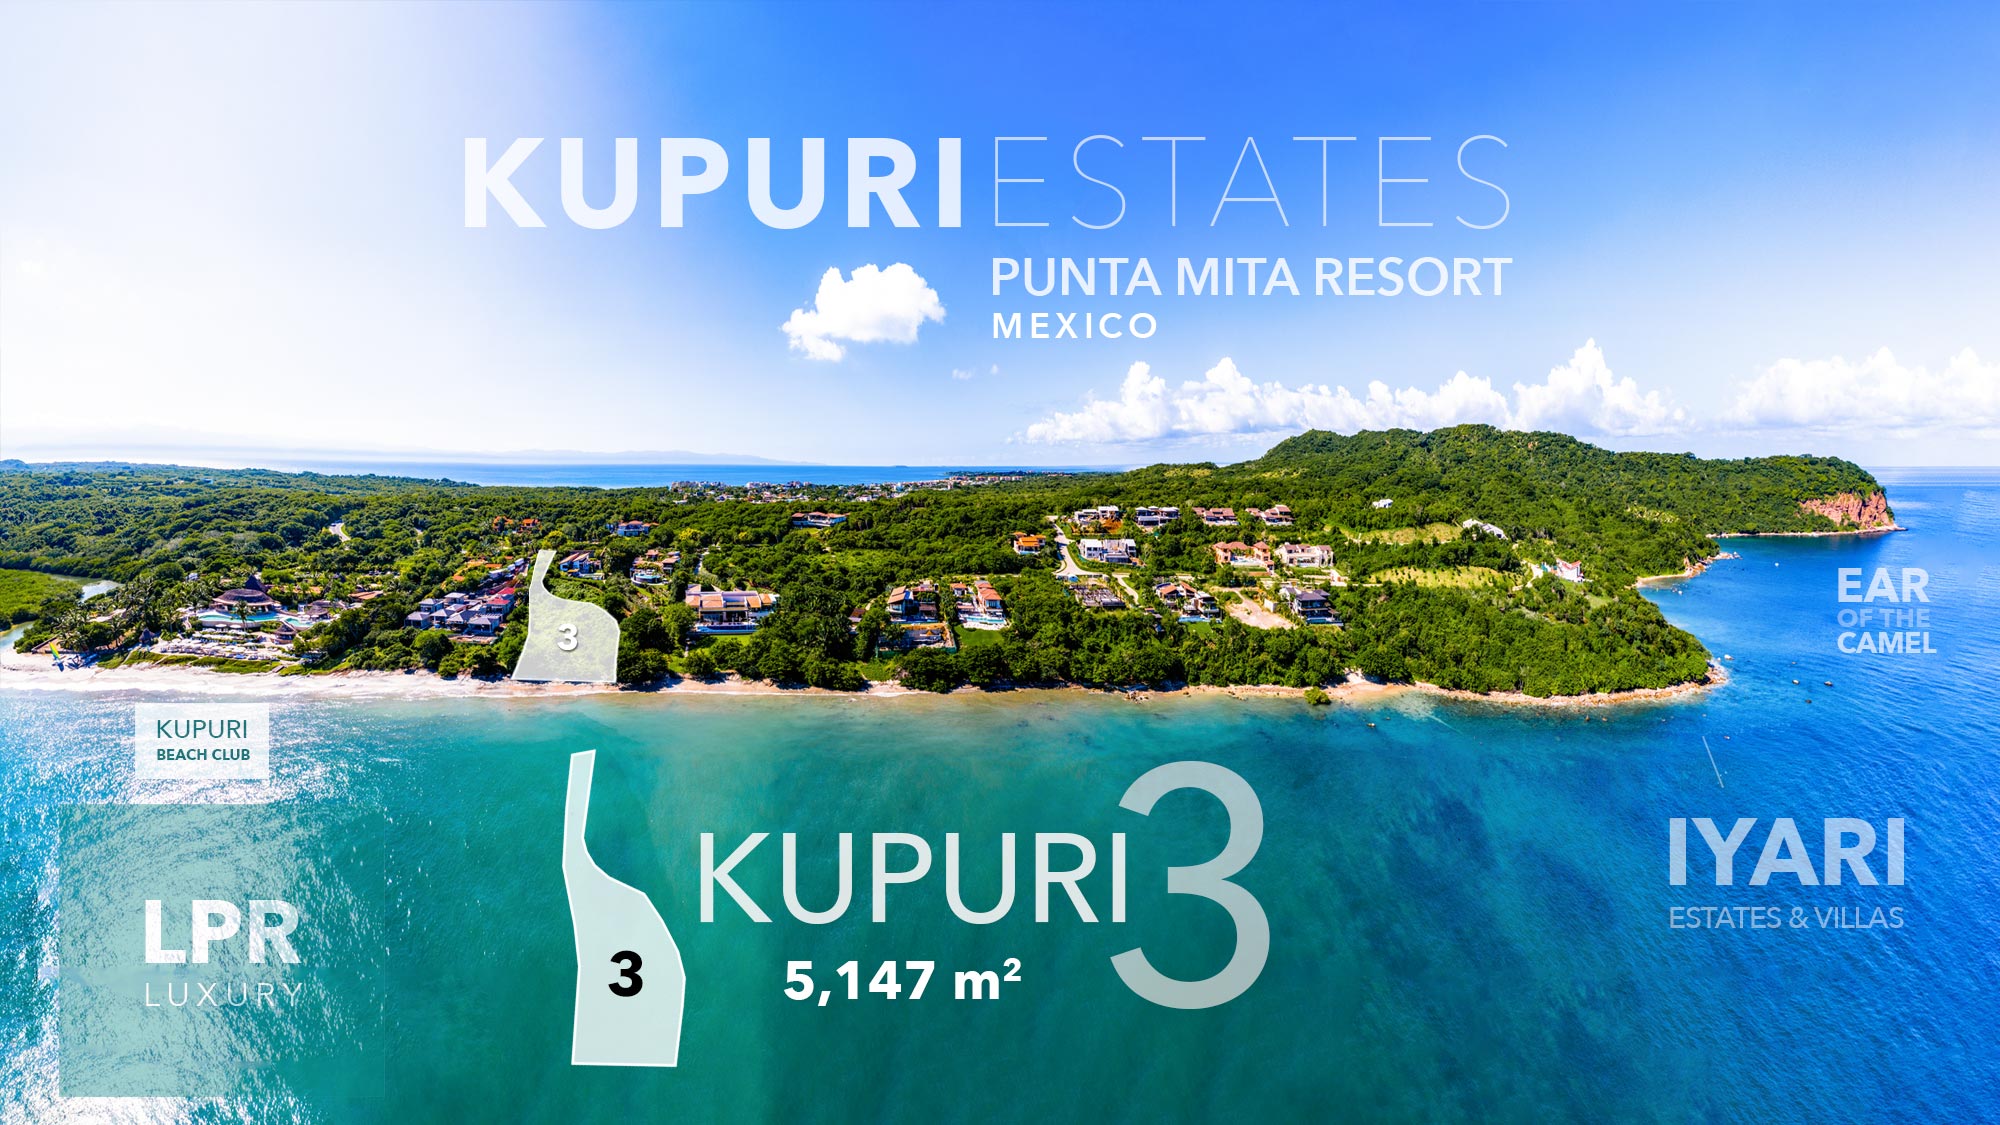 Kupuri Estates - Lot 3 - Punta Mita Resort luxury real estate - homesite beachfront residential resort low density community - real estate and vacation rentals